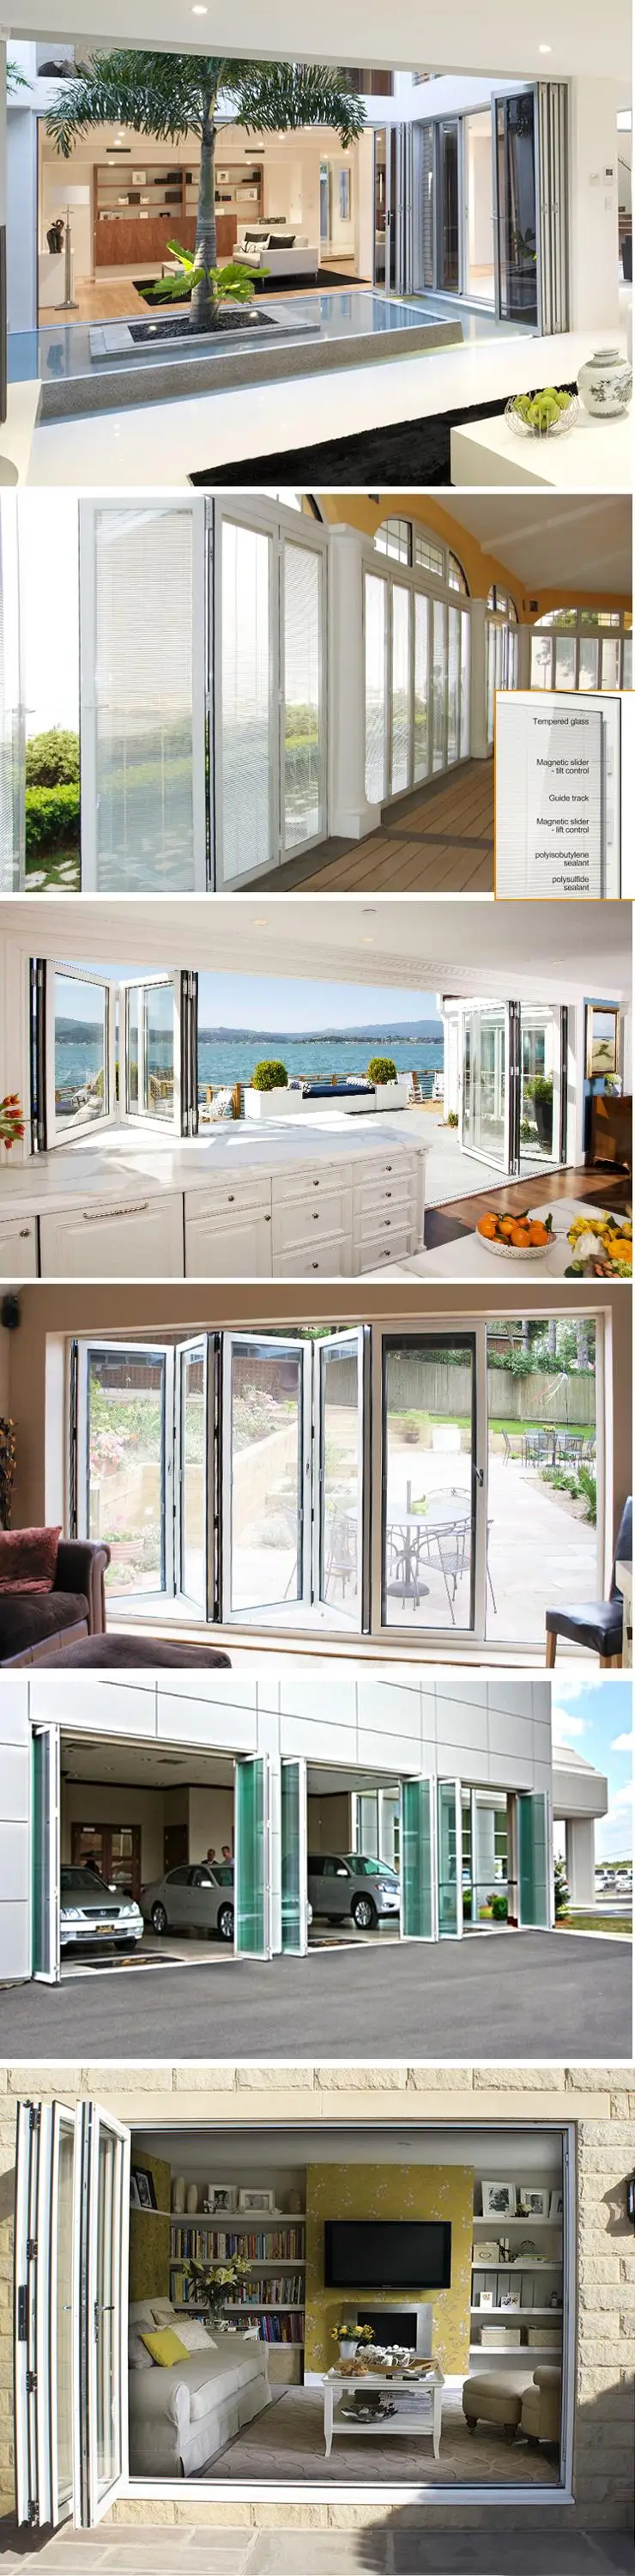 Aluminum Exterior Bifolding doors With Tempered Glass Foldable Door / bifold windows for Home